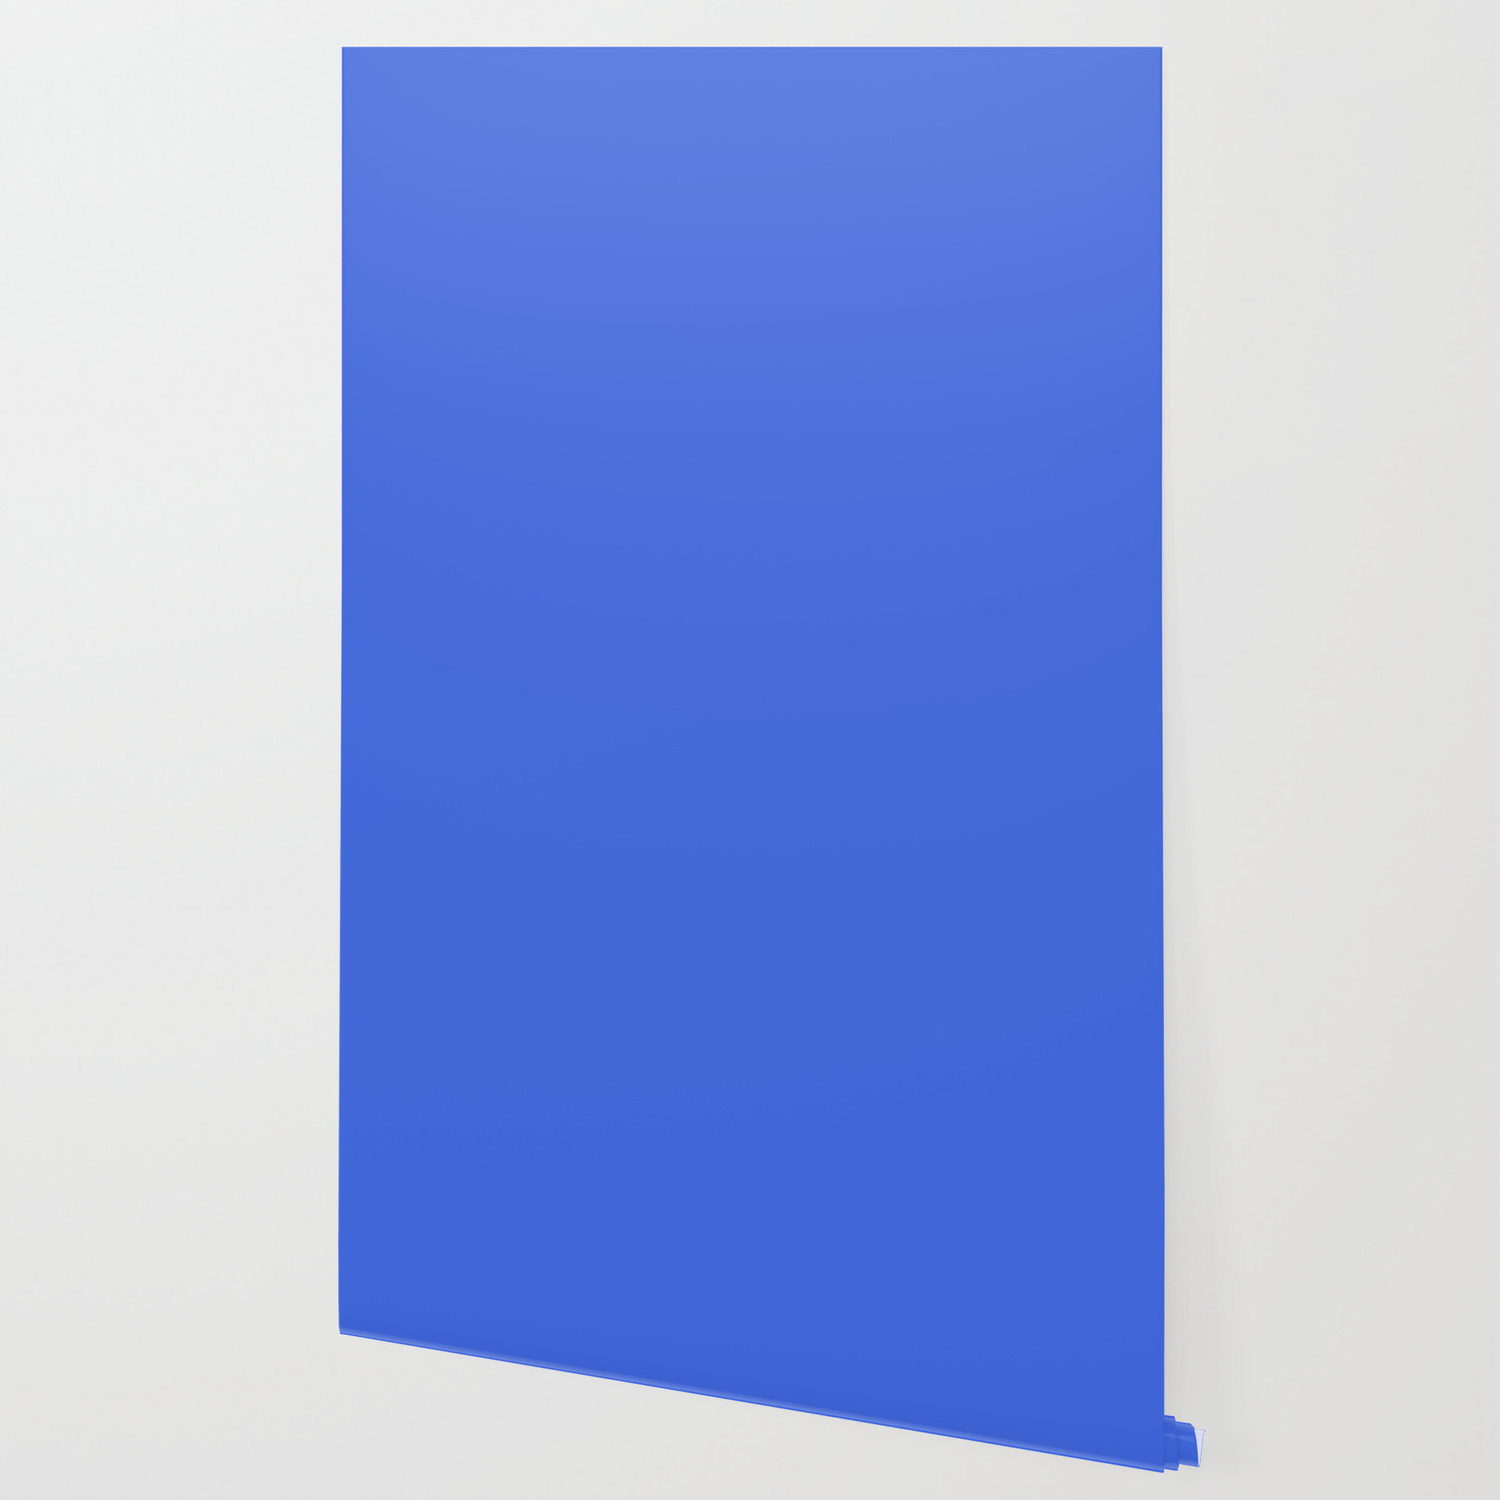 Royal Blue plain color Wallpaper by Kars54Designs | Society6